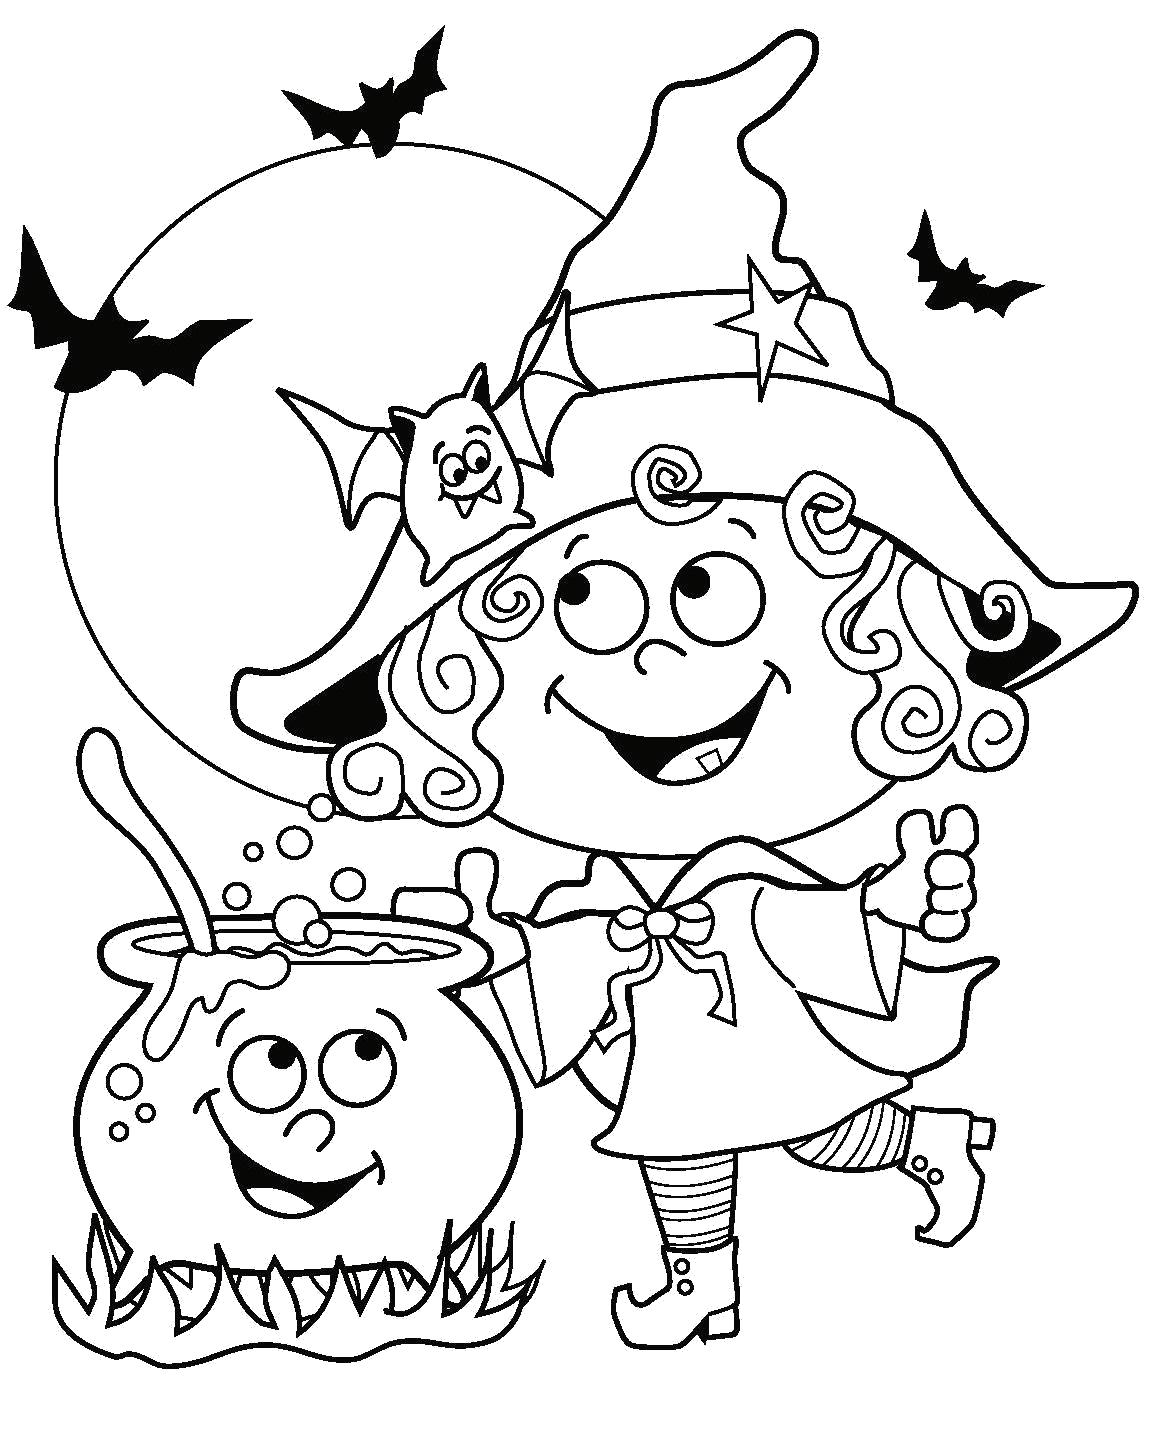 Название: Раскраска Веселая девочка на Хэллоуин. Категория: Хэллоуин. Теги: ведьма.